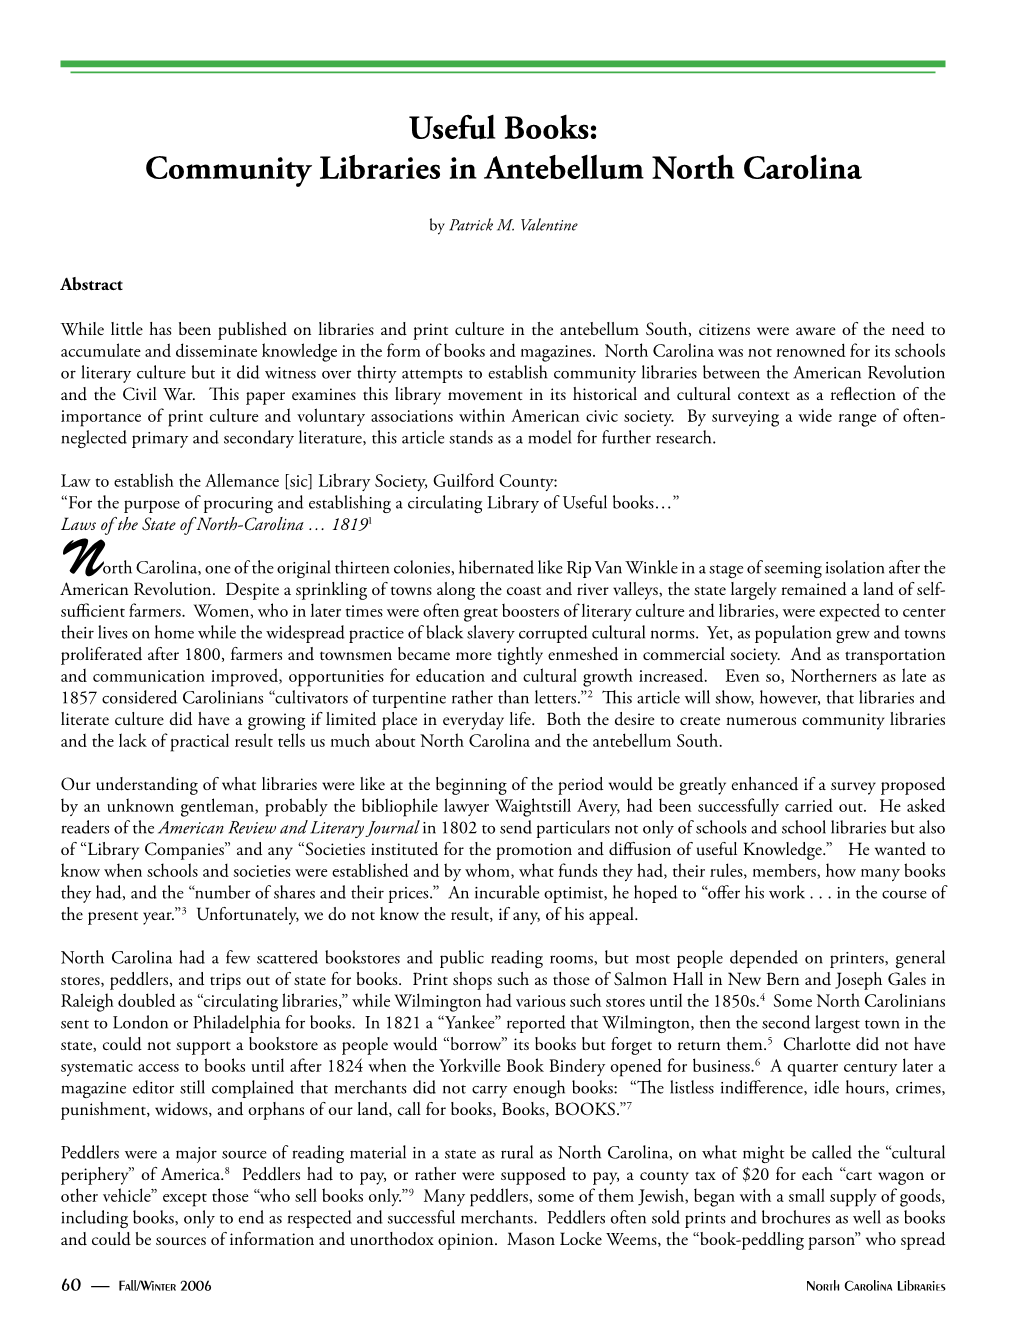 Useful Books: Community Libraries in Antebellum North Carolina